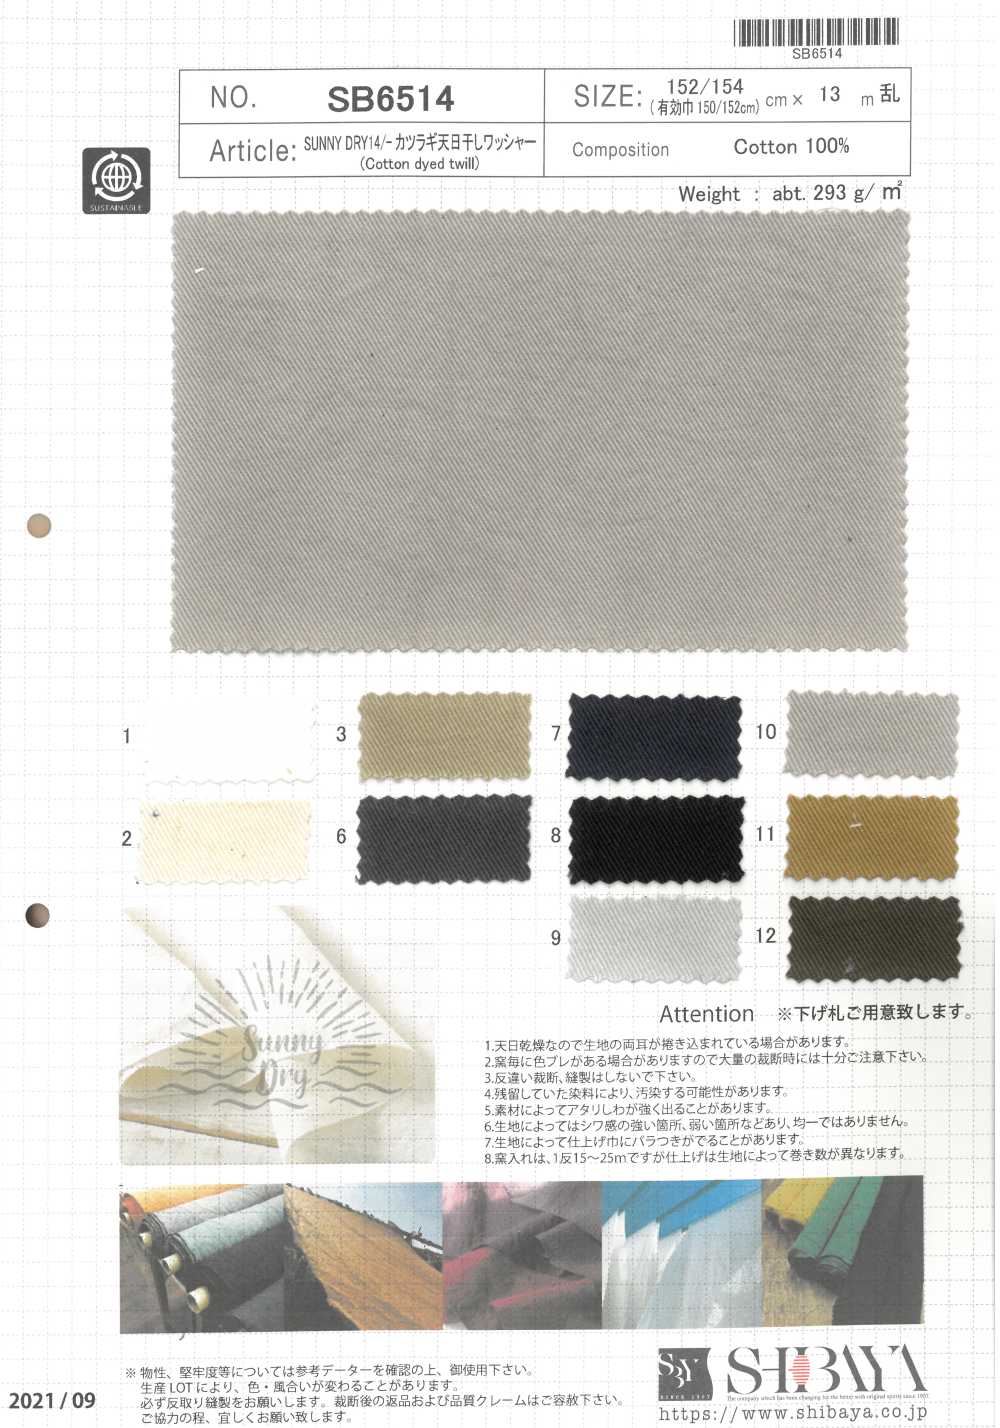 SB6514 SUNNY DRY 14/ Drill Sun-dried Washer Processing[Textile / Fabric] SHIBAYA